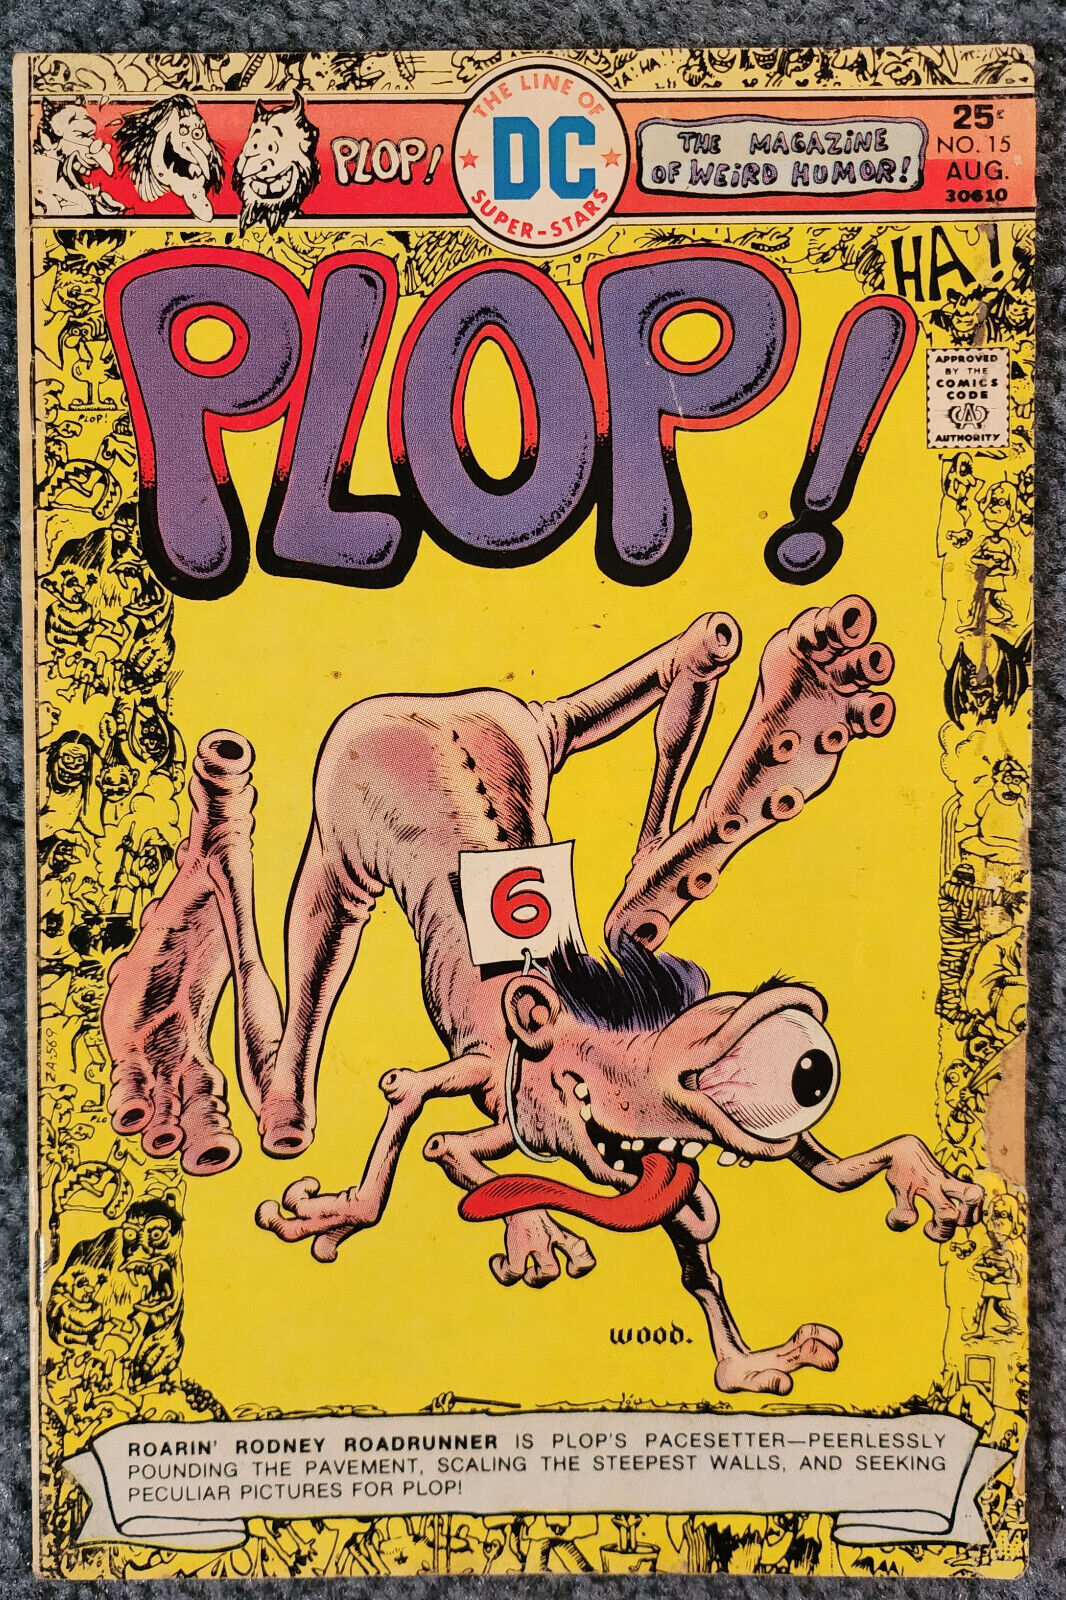 PLOP #15 DC COMICS 1975 THE MAGAZINE OF WEIRD HUMOR - VG+